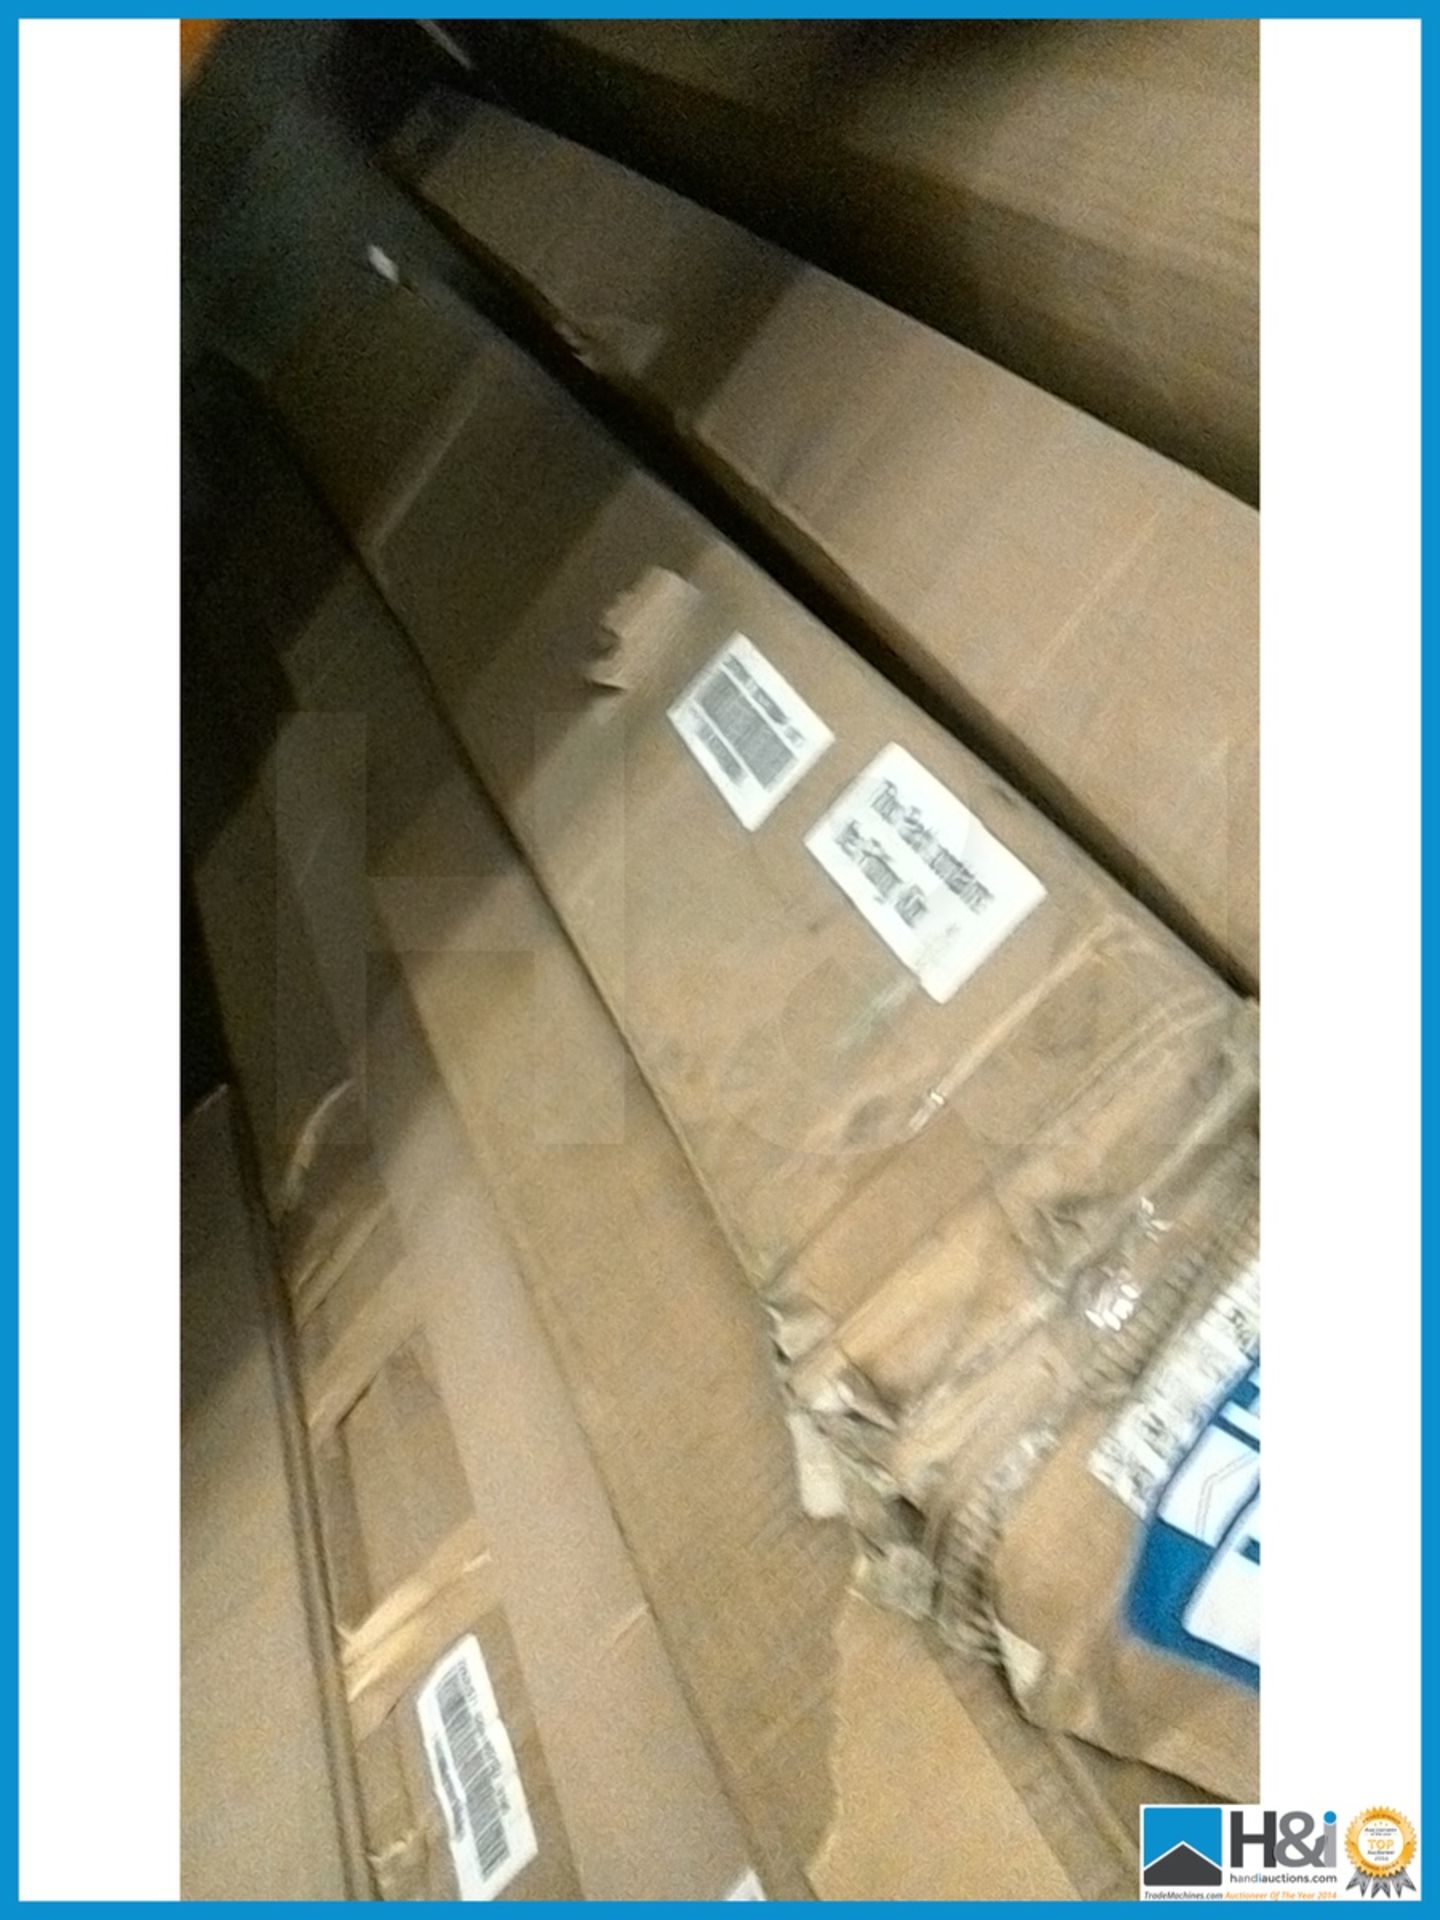 DAMAGED BOX ITEM A1 PERU 3DOOR 3DRAWER WARDROBE [ESPRESSO] 182 x 120 x 52cm RRP £324 Appraisal: - Image 3 of 3